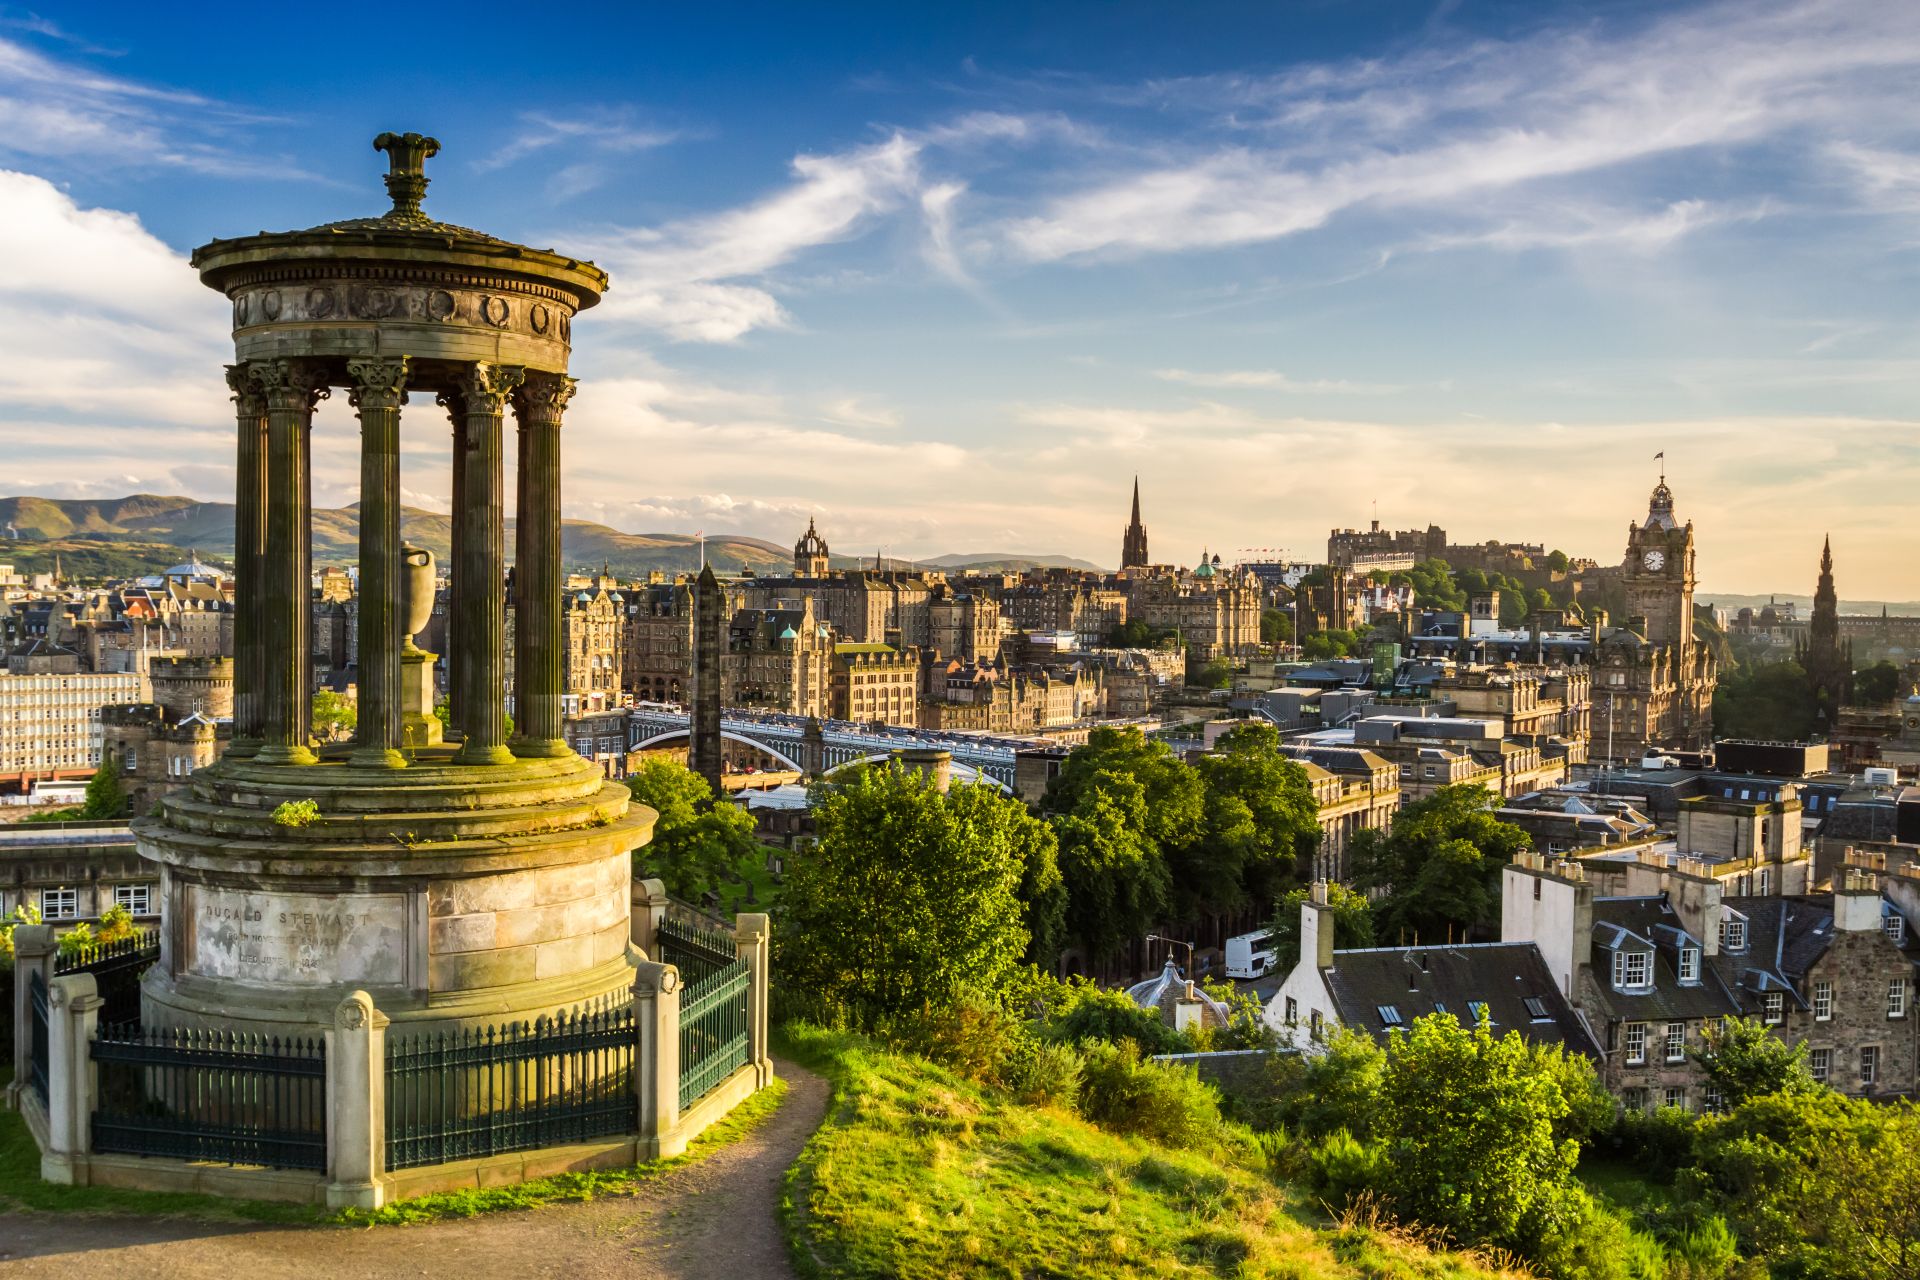 Beautiful views of the city of Edinburgh